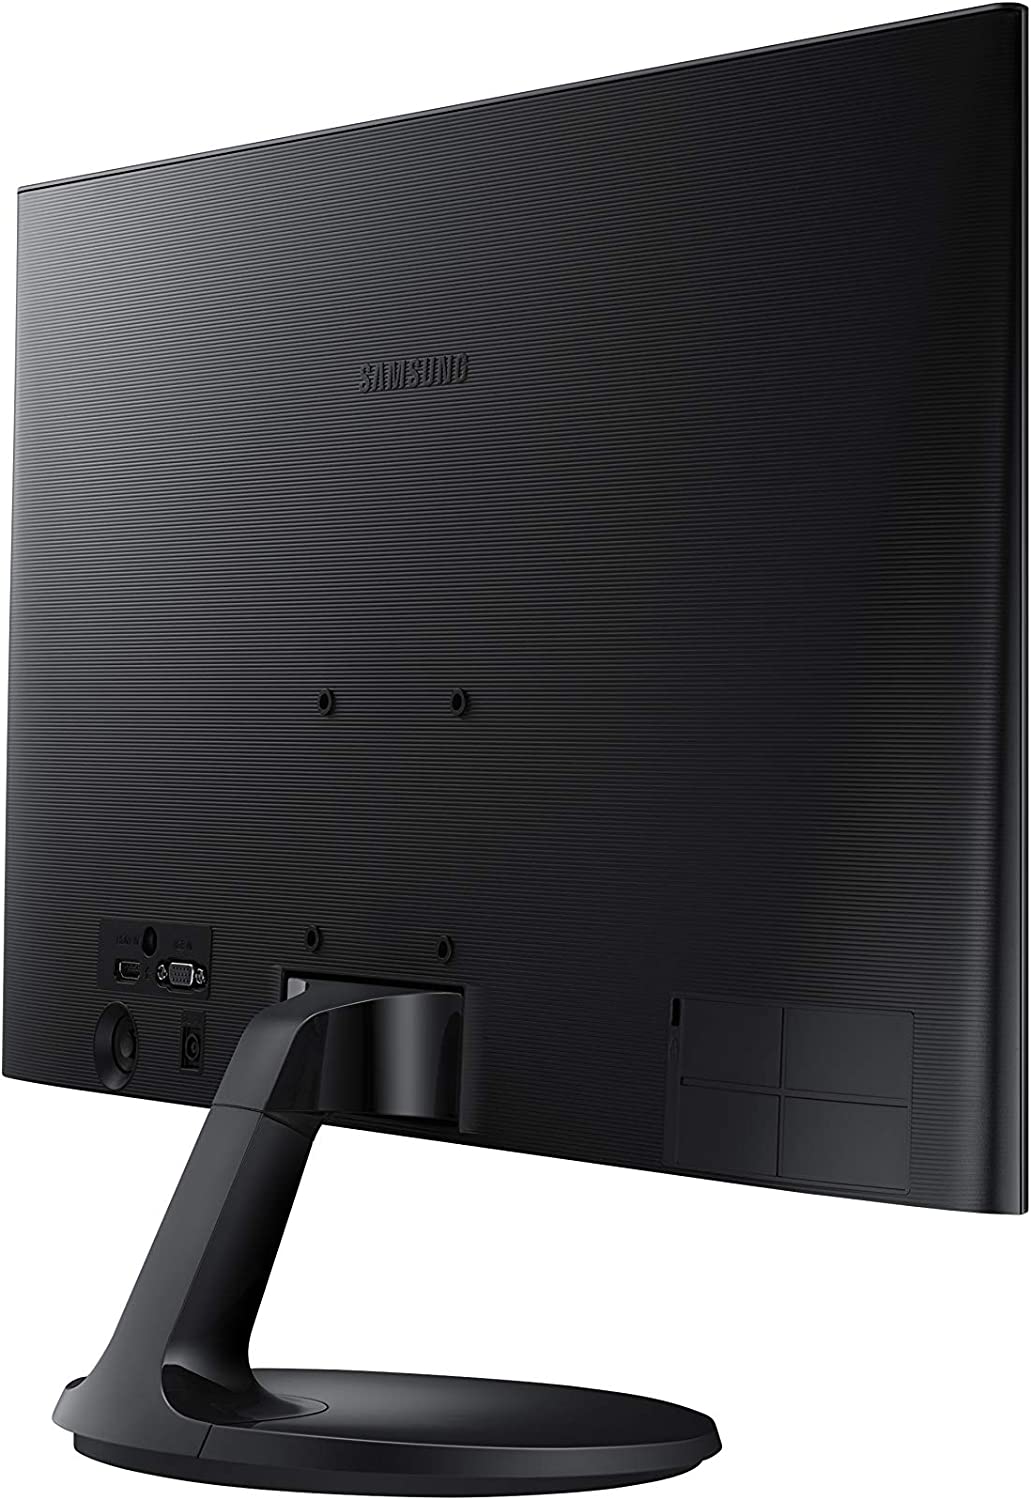 SAMSUNG 27" FHD Flat Monitor with Super-Slim Design - LS27F354FHNXZA, Black 27 in Single